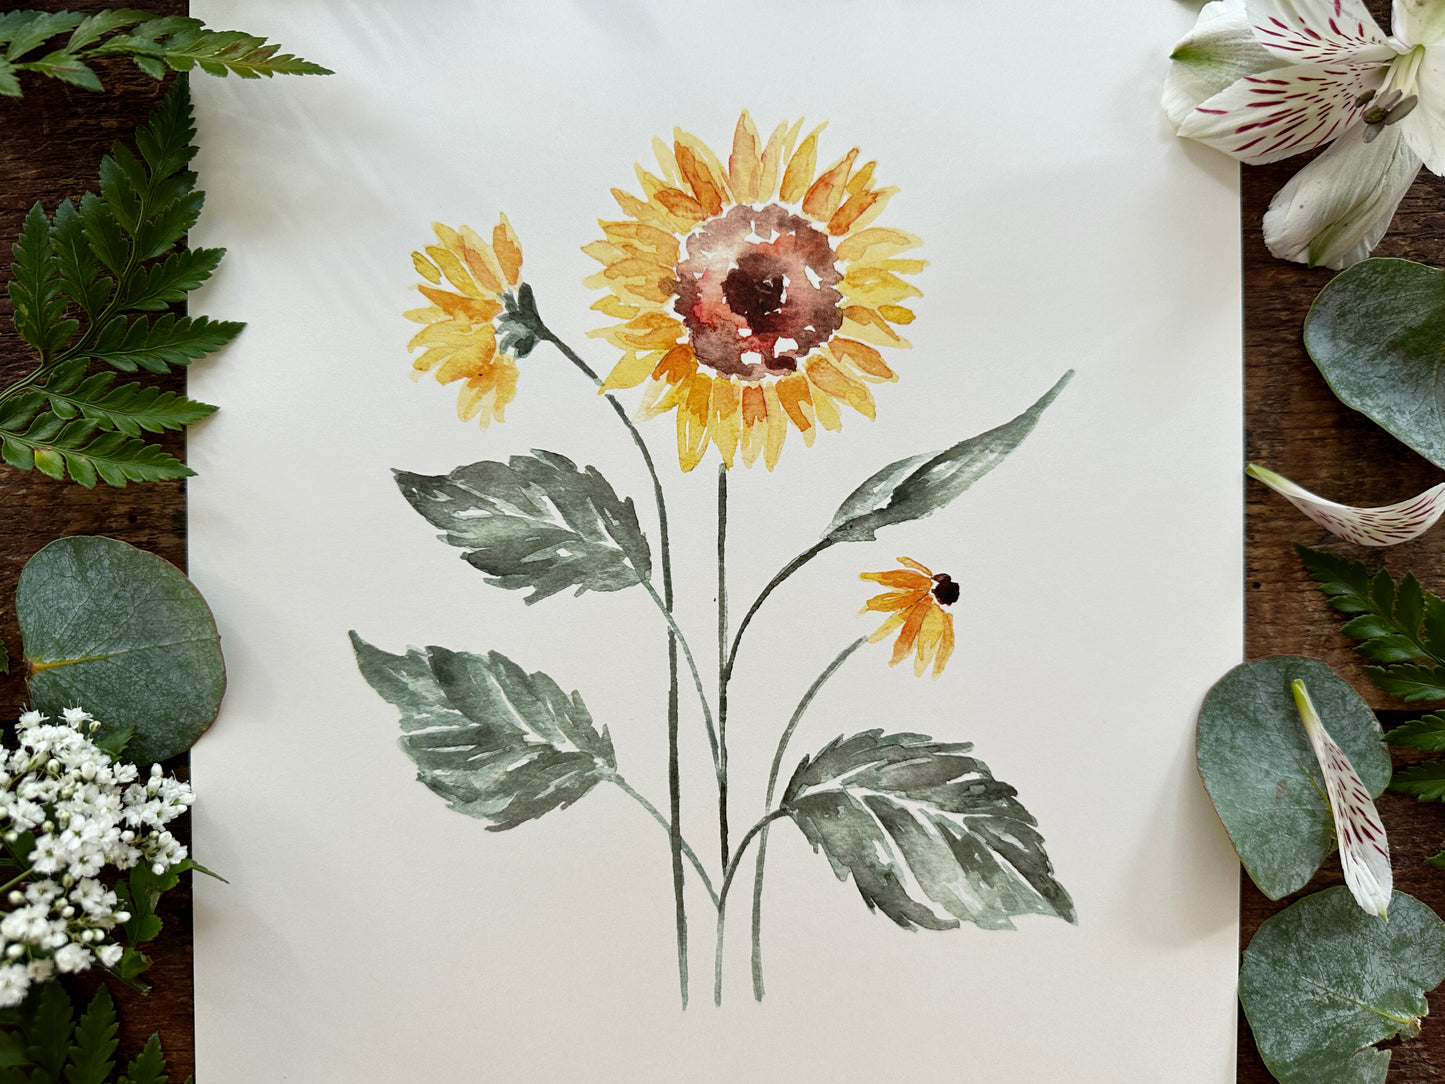 Sunflower Print